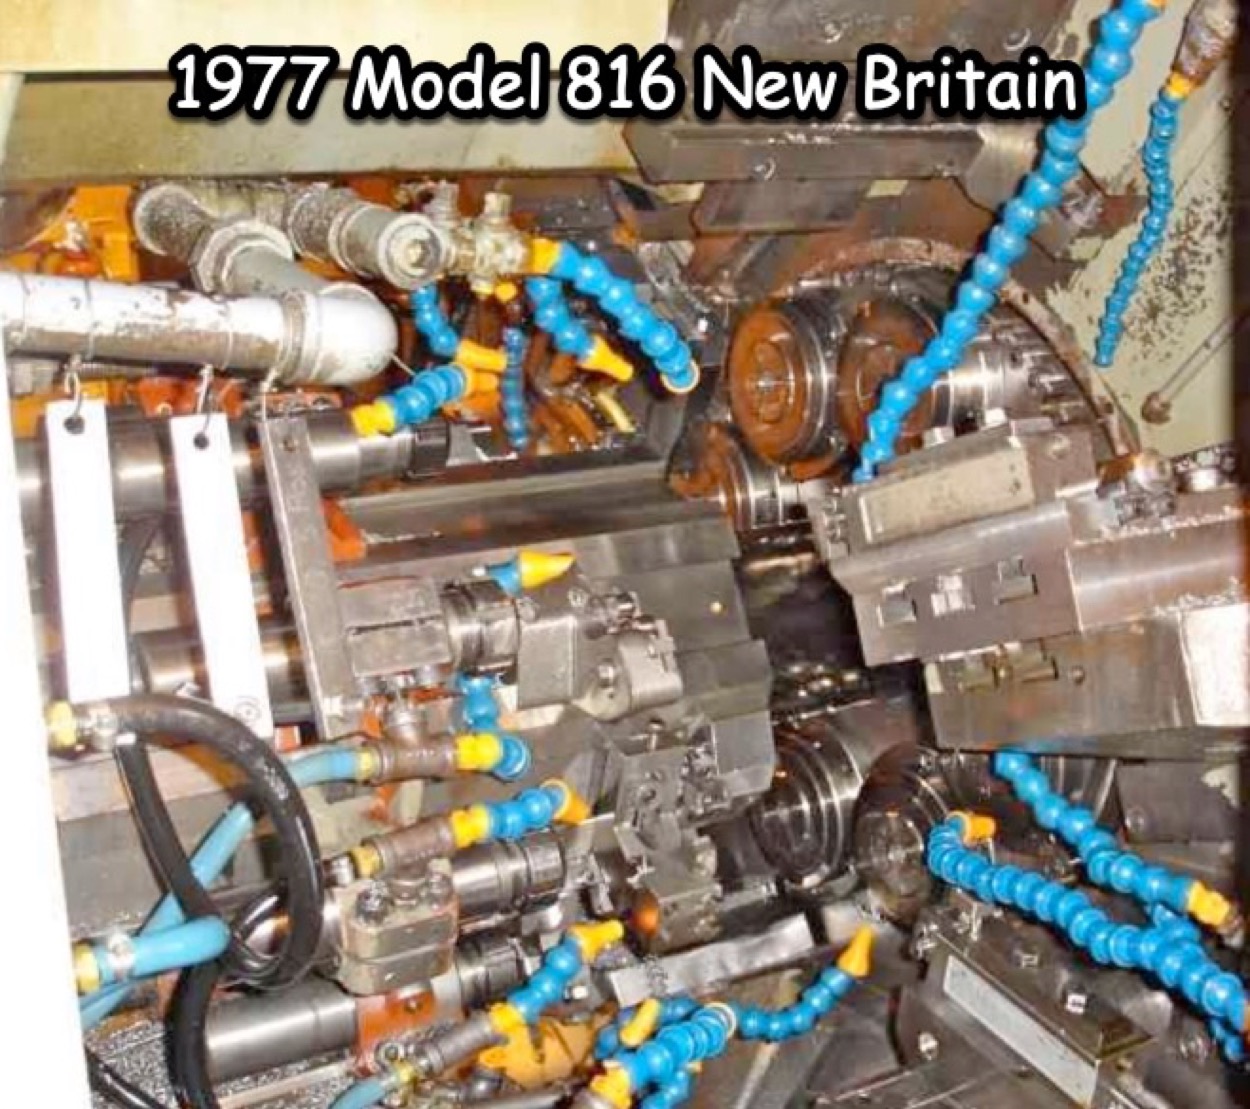 New Britain 816 1977